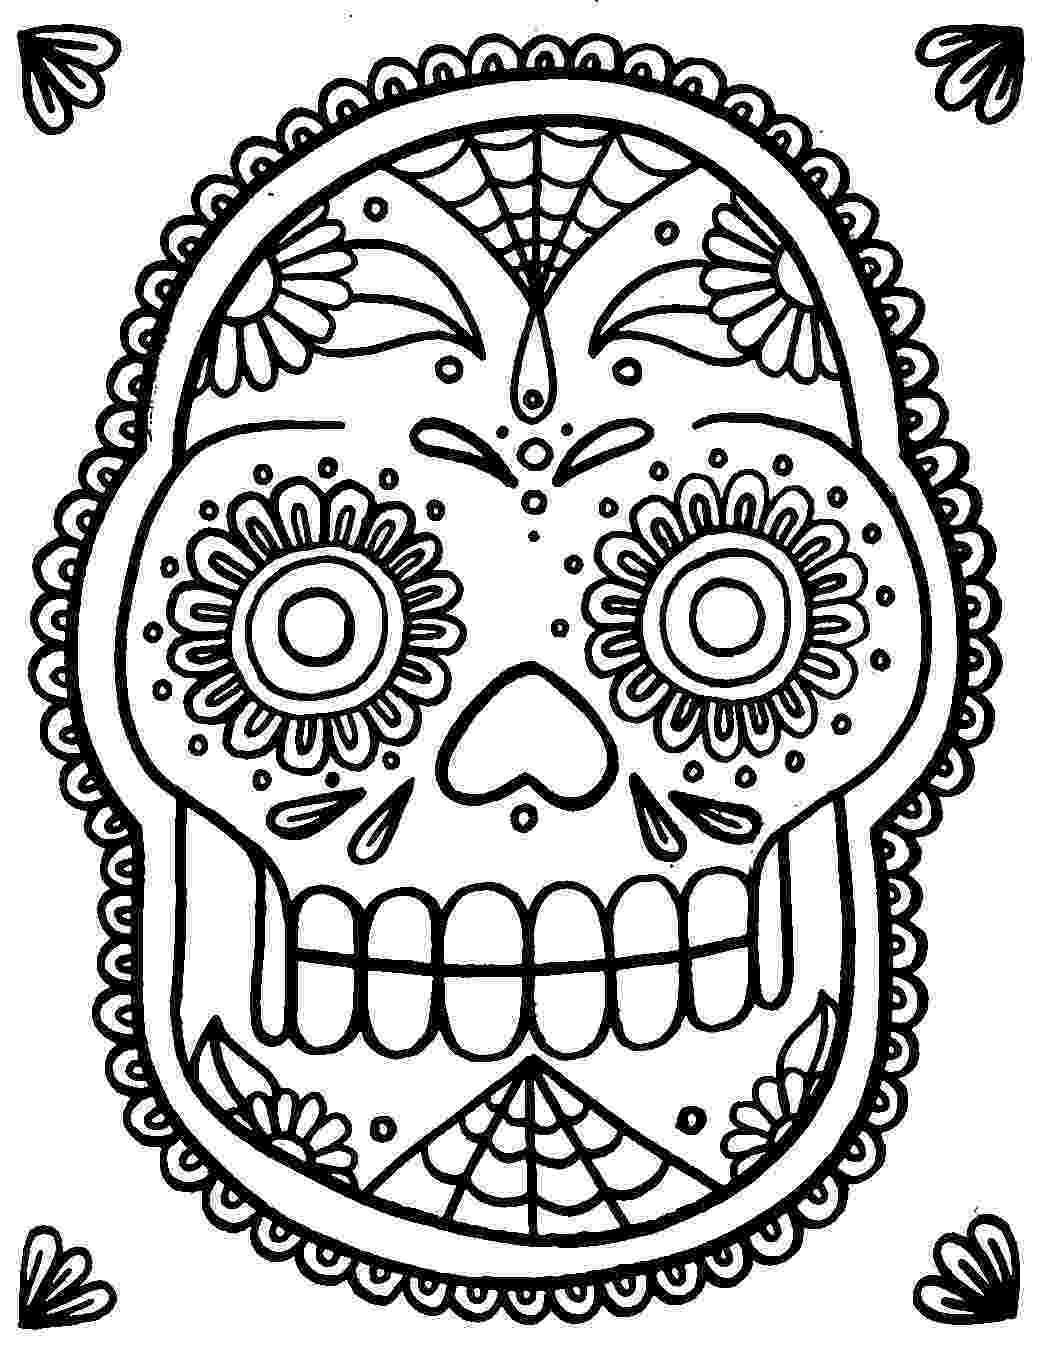 pics of sugar skulls best 469 stress coloring ready to print images on skulls sugar pics of 